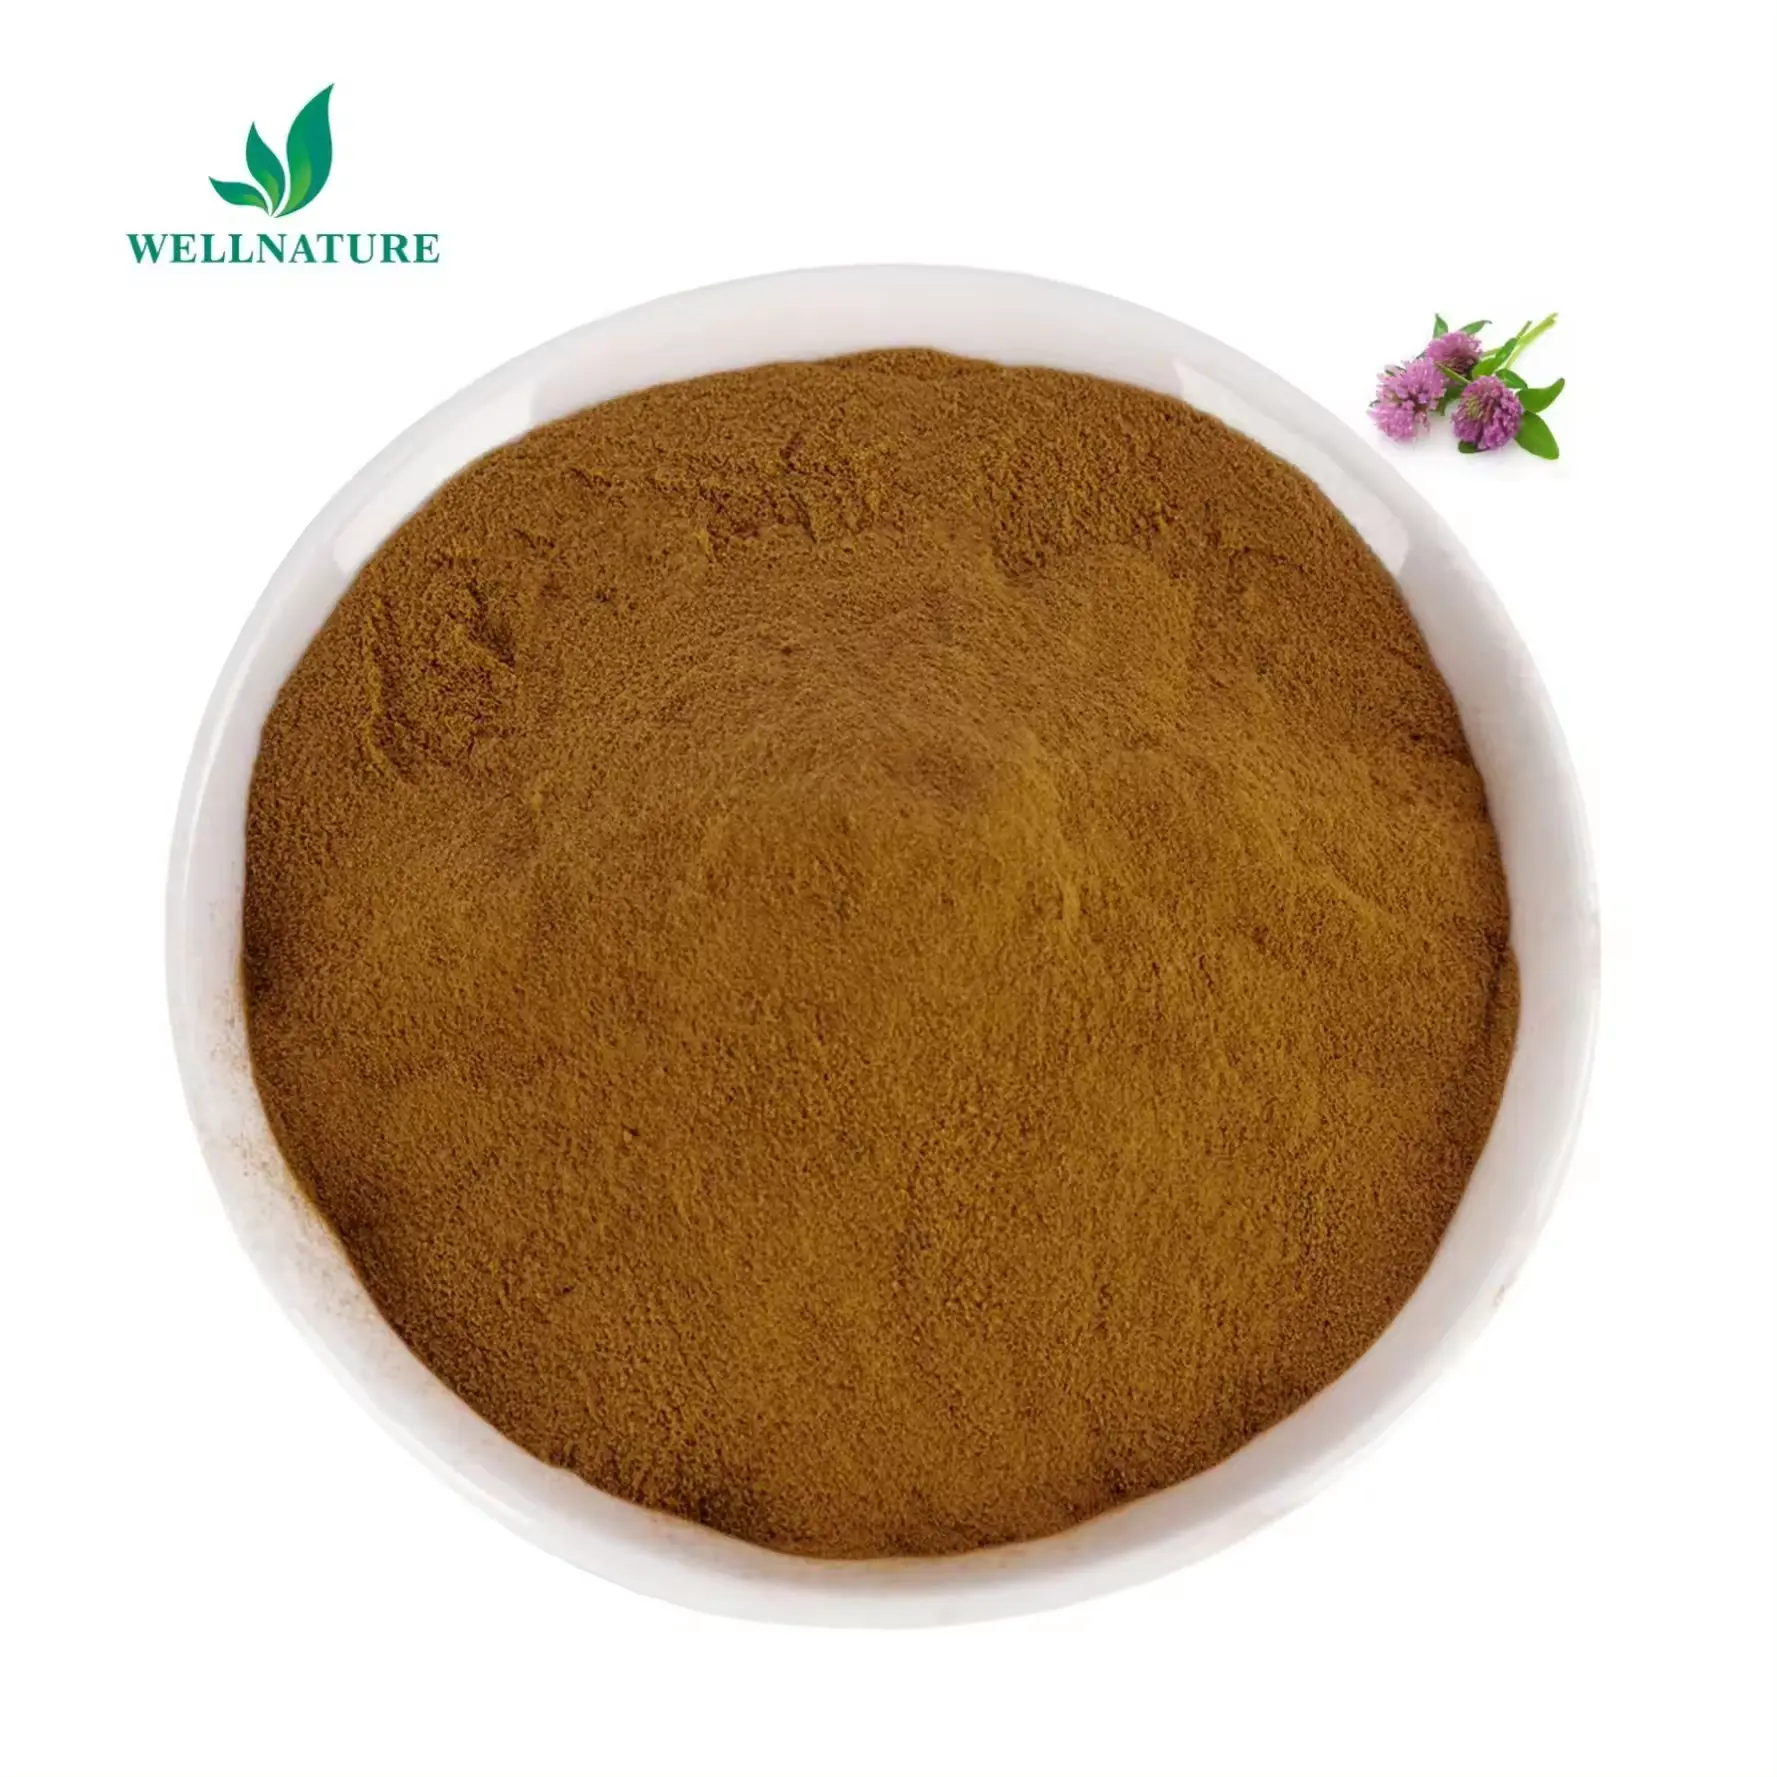 Wellnature Supply Poudre d'extrait de trèfle rouge 40% isoflavone